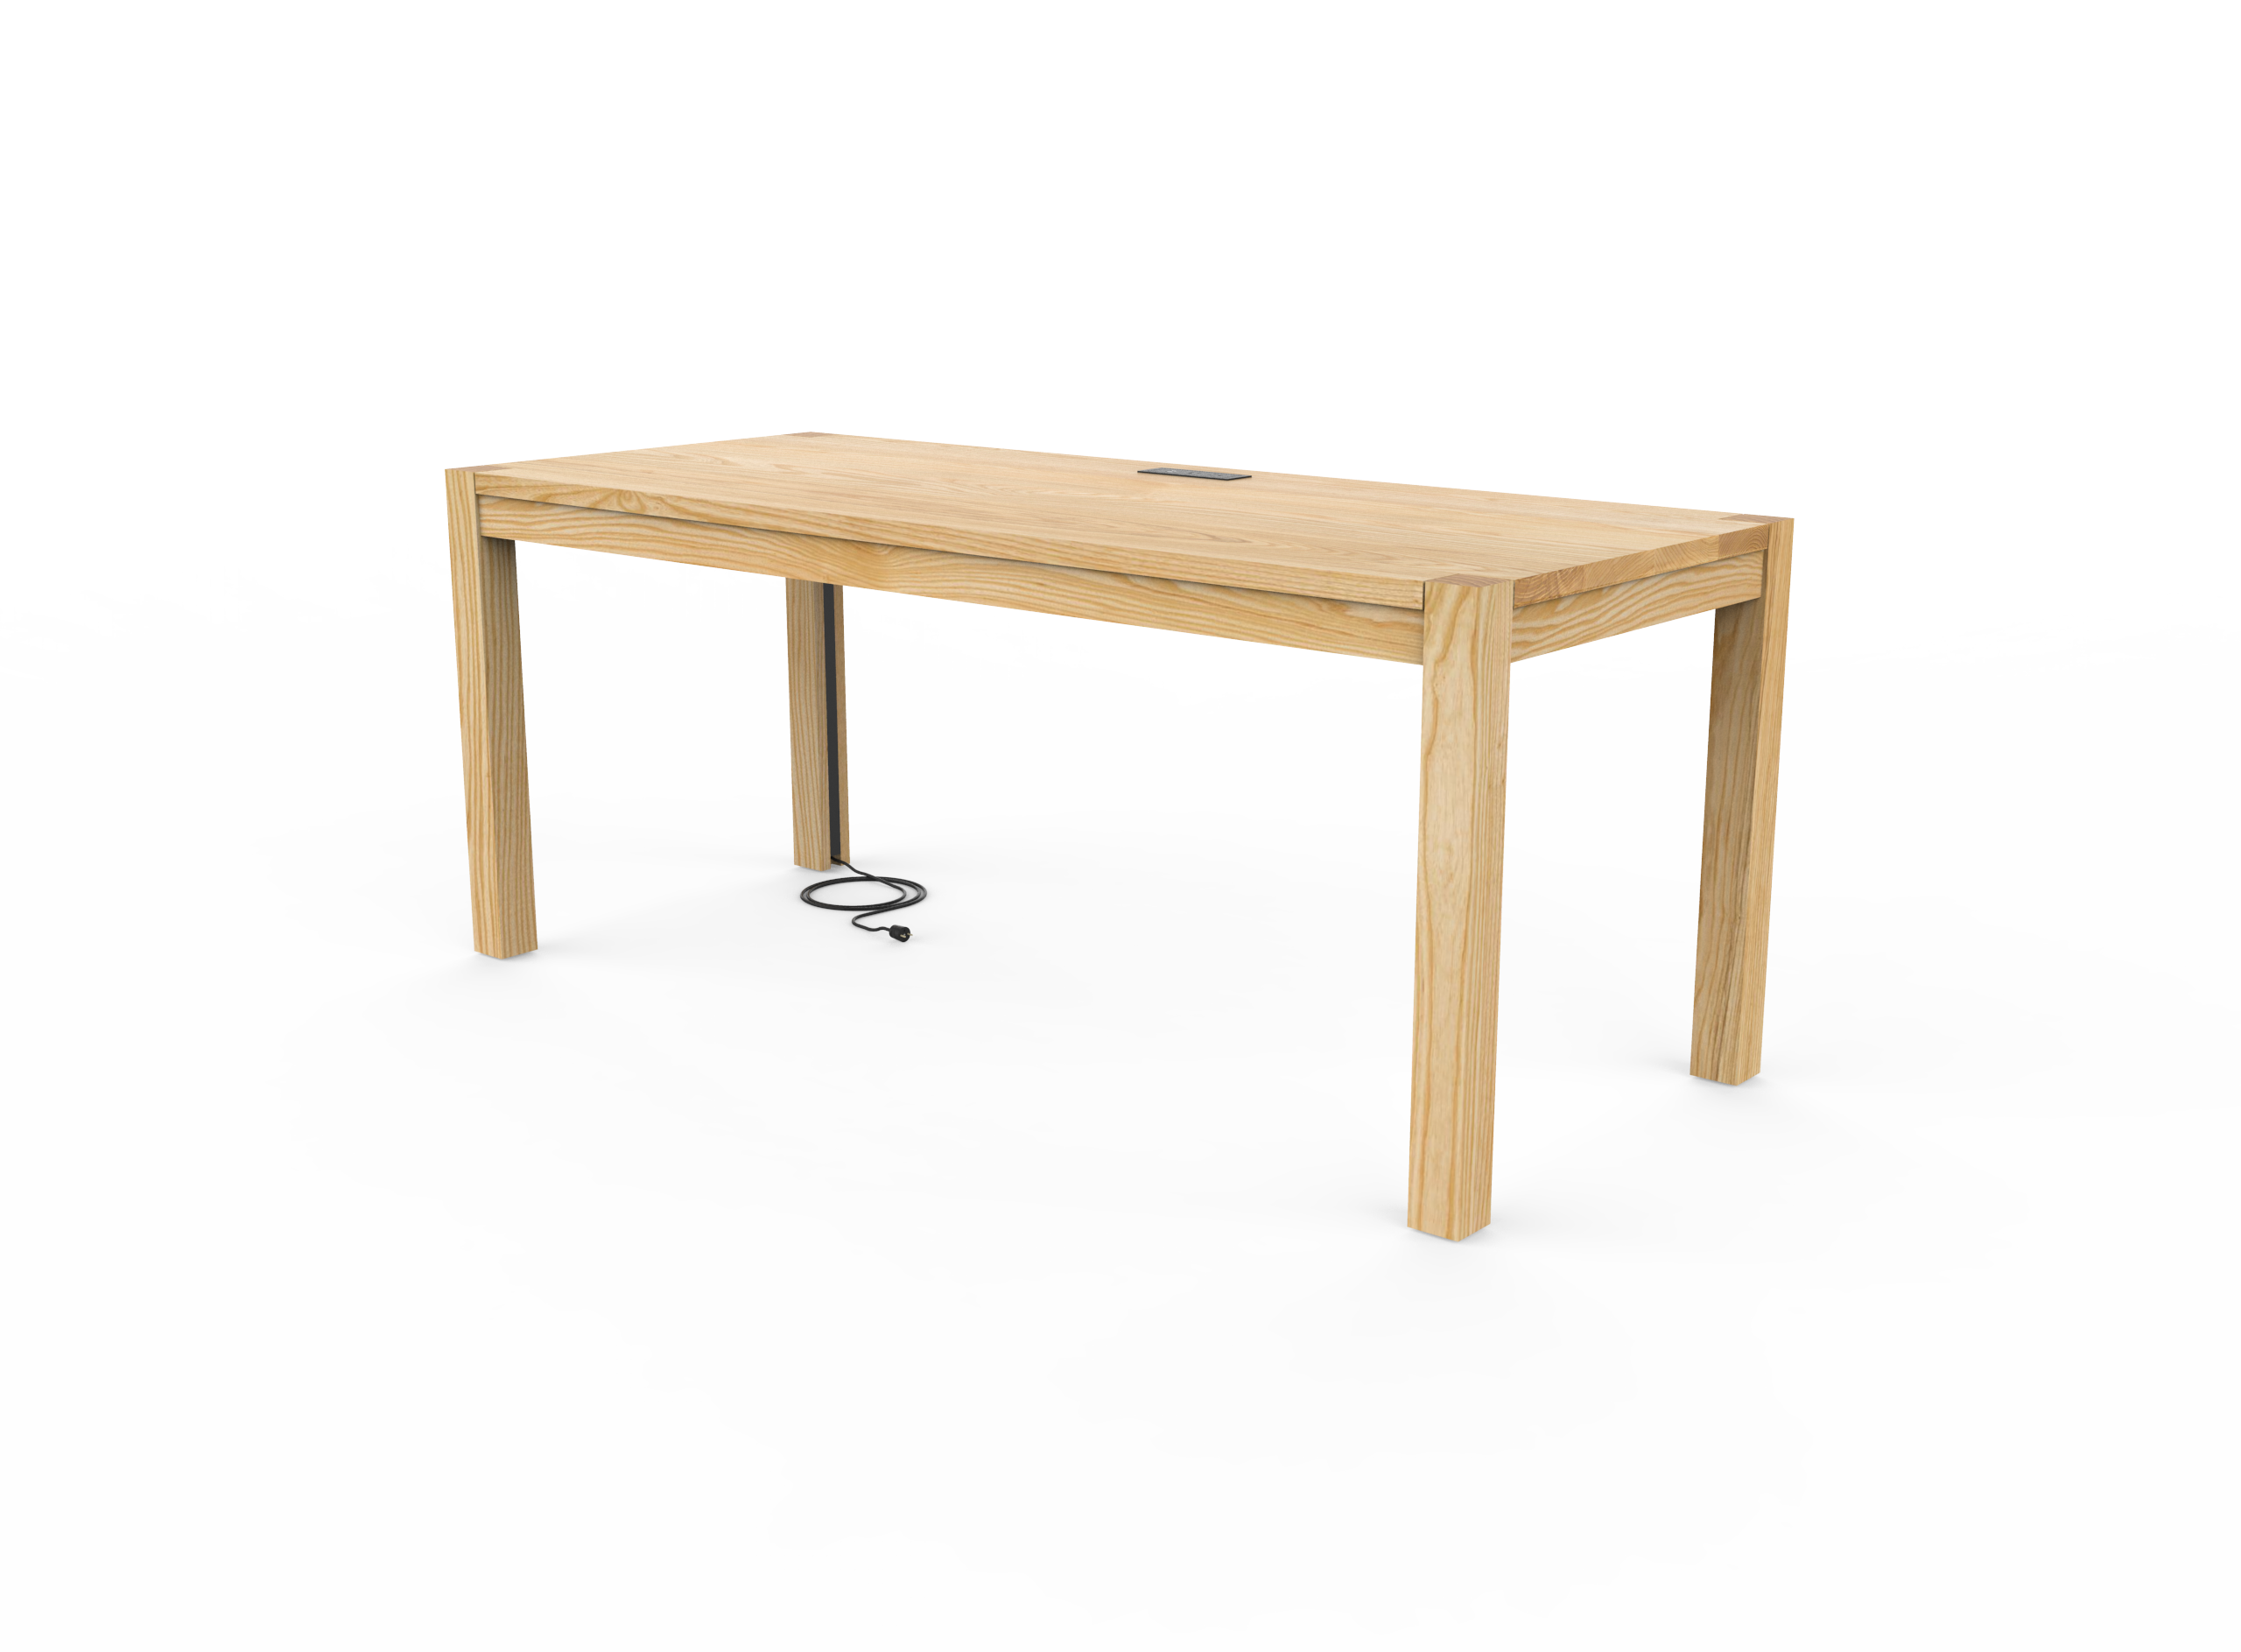 Vermont Farm Table Custom Wood Desk Parsons 30x72 003 Ash 